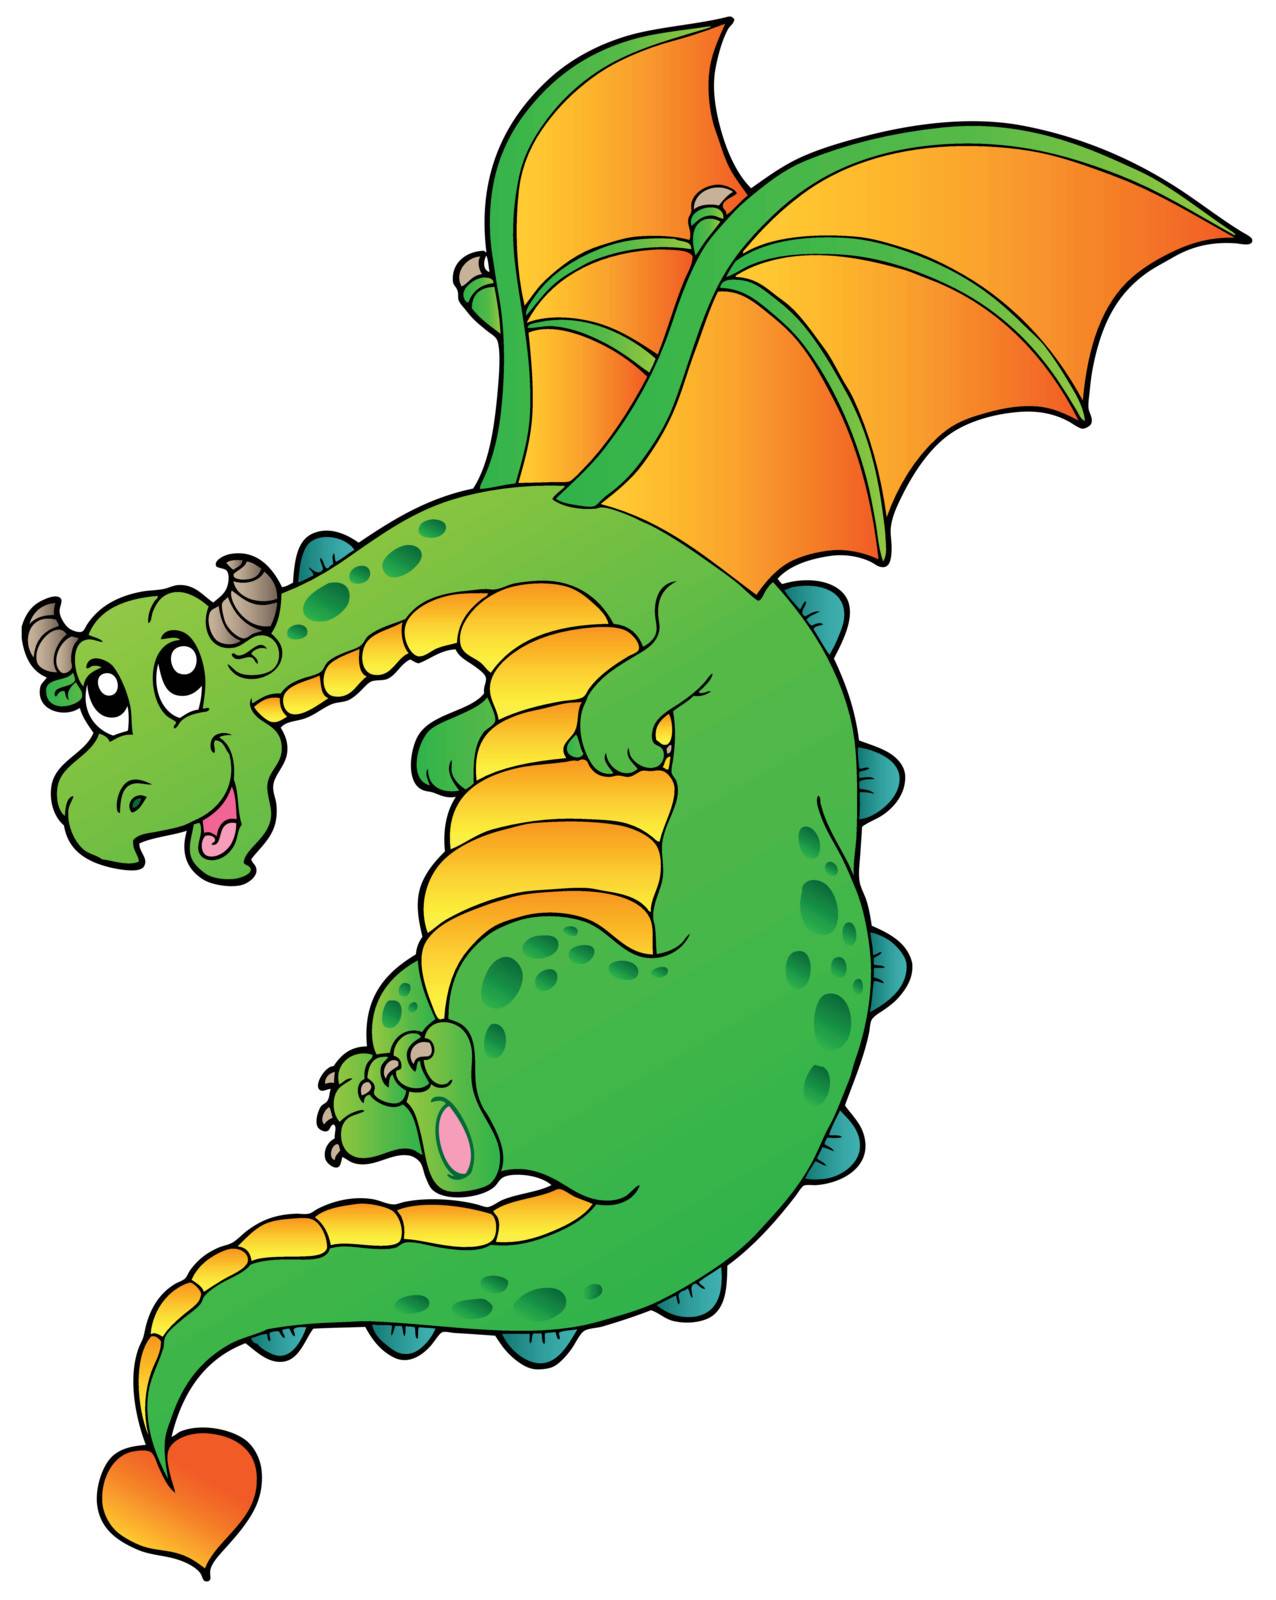 Flying fairy tale dragon - vector illustration.